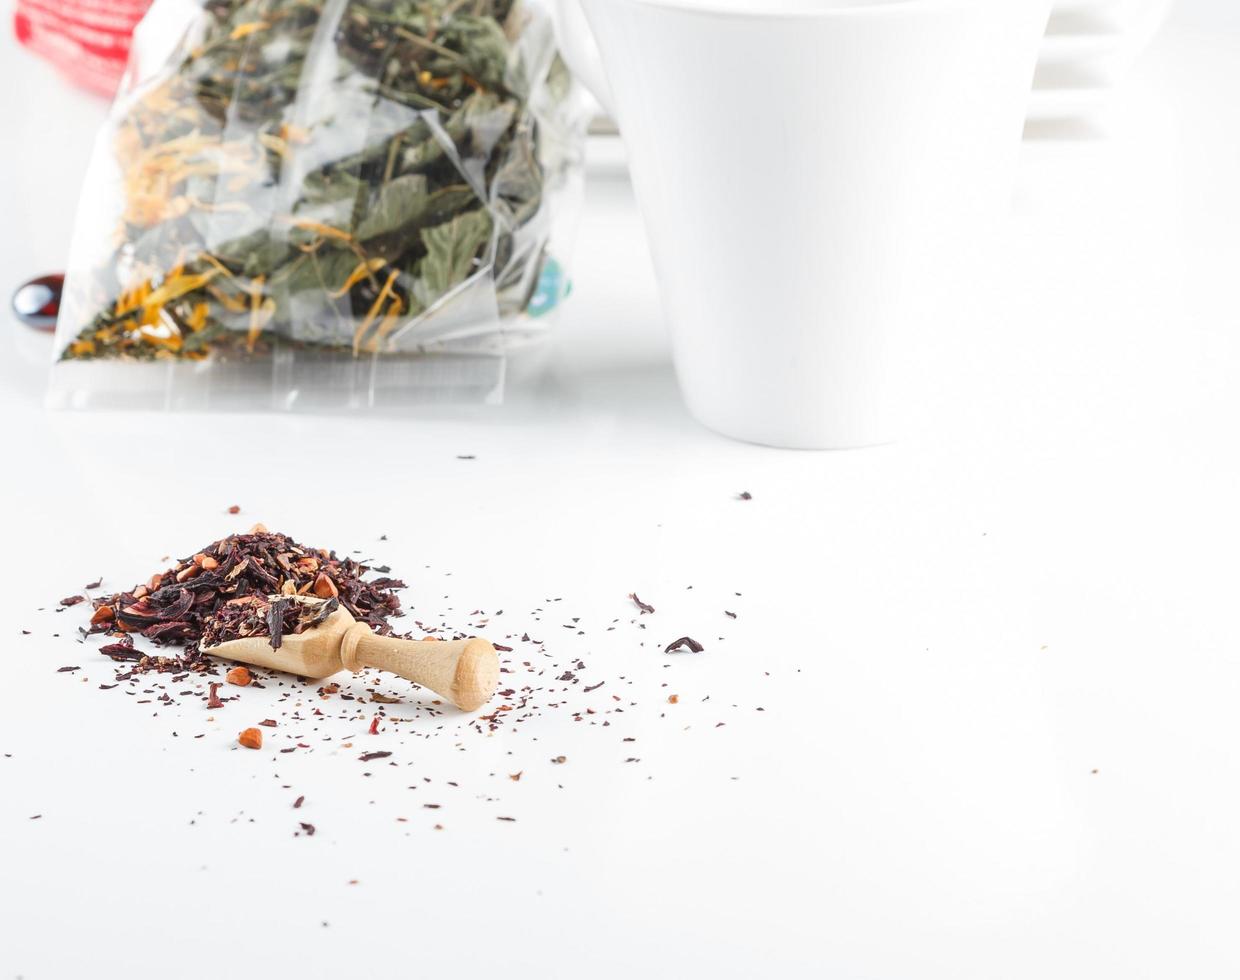 Asian aromatic tea herbs good health and mental benefits photo